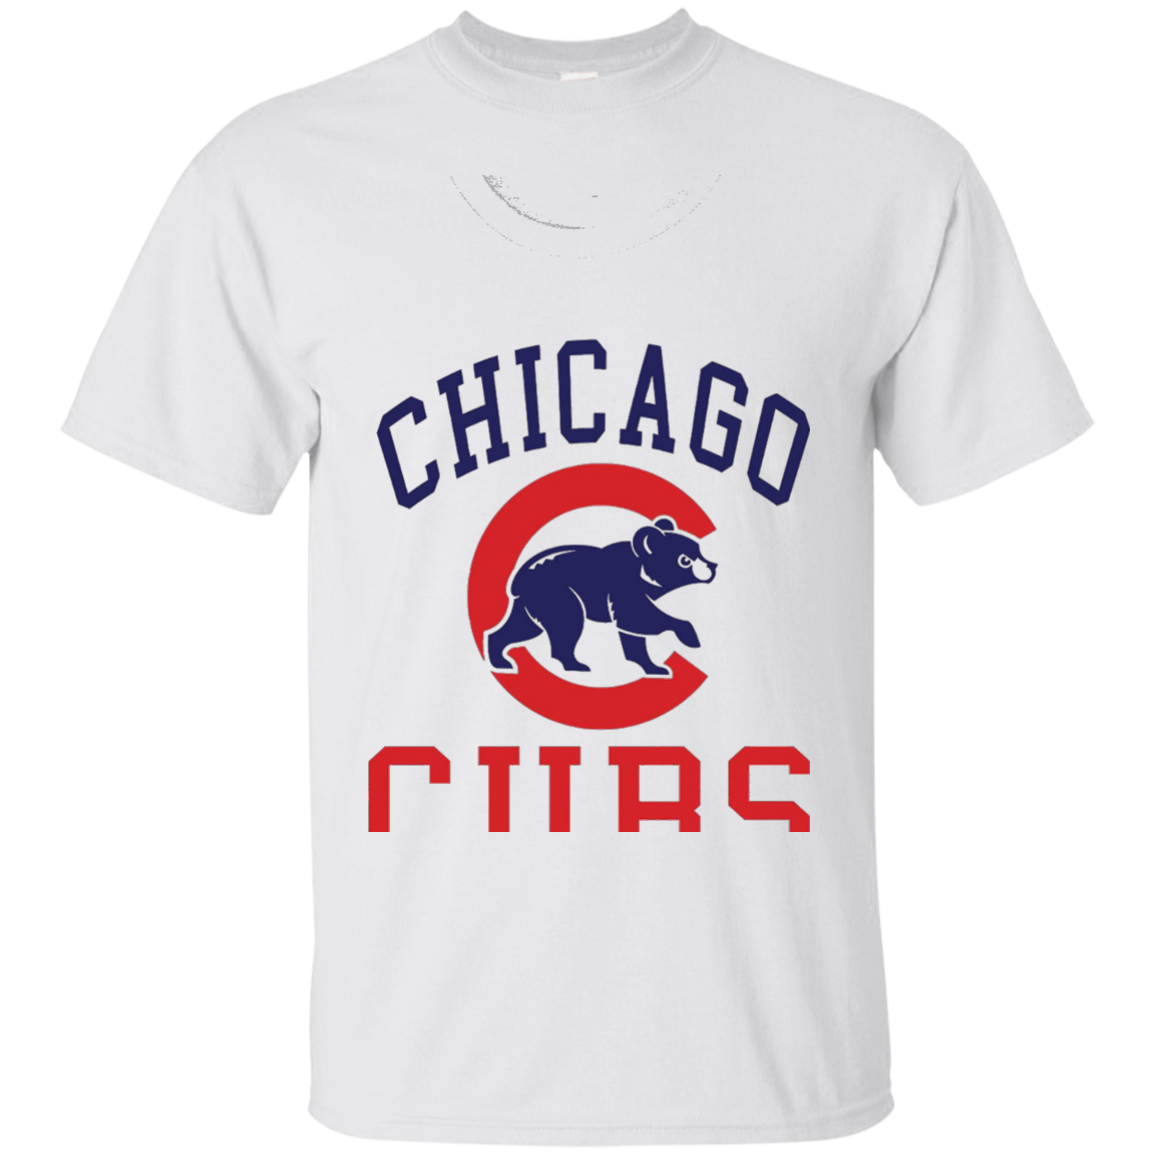 Cubs Baseball Team Chi-ca-go Allsex T Shirt